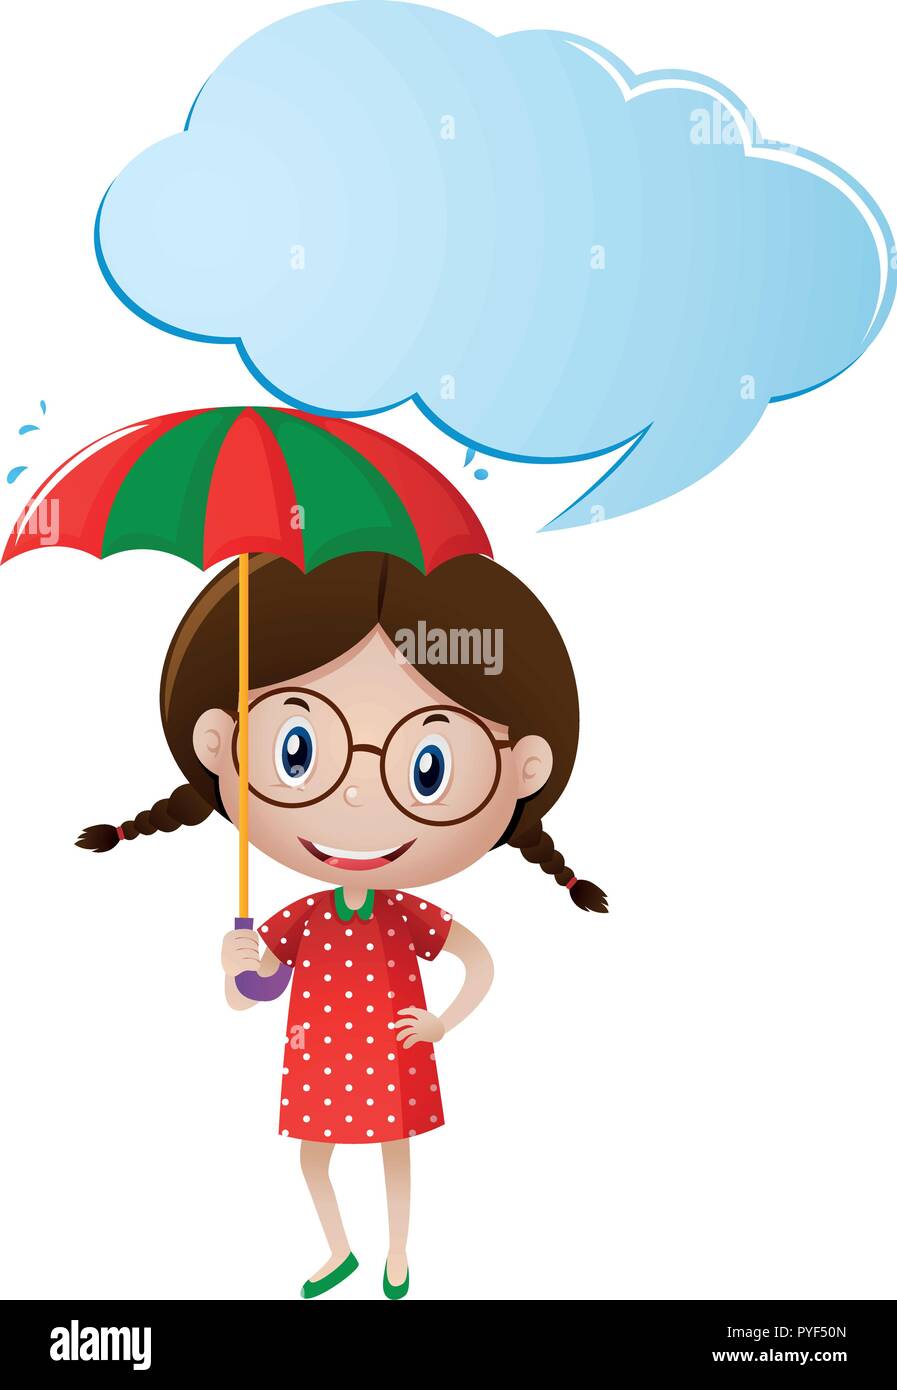 Speech bubble template with girl holding umbrella illustration Stock Vector